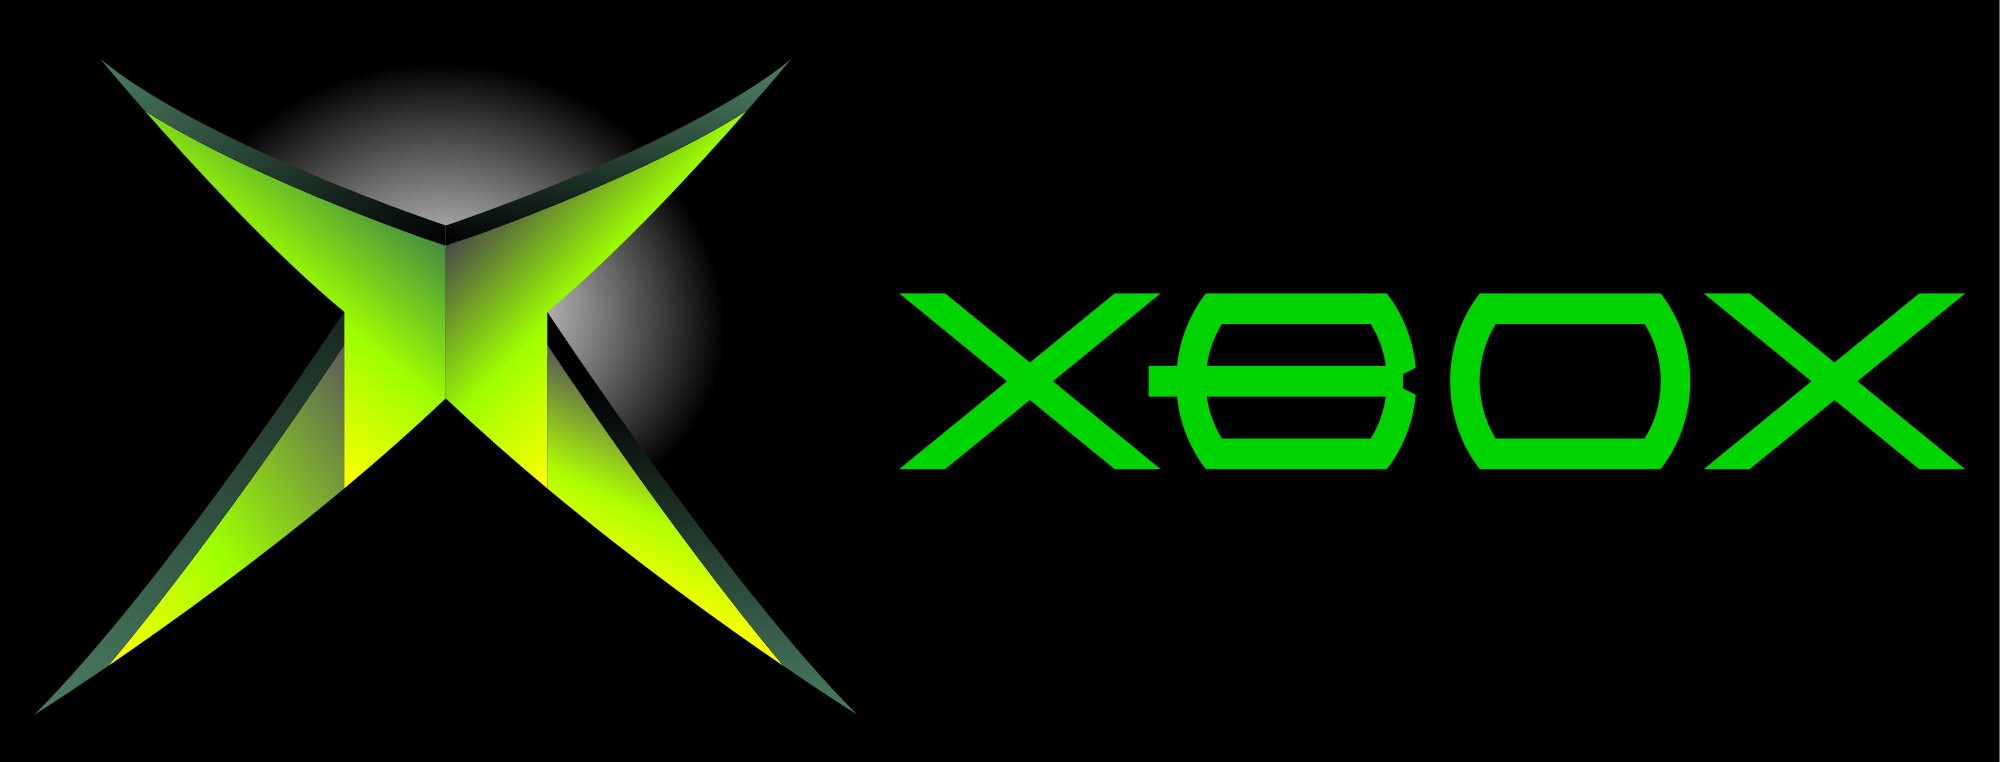 2000px-Xbox-logo-schwarz-svg.png